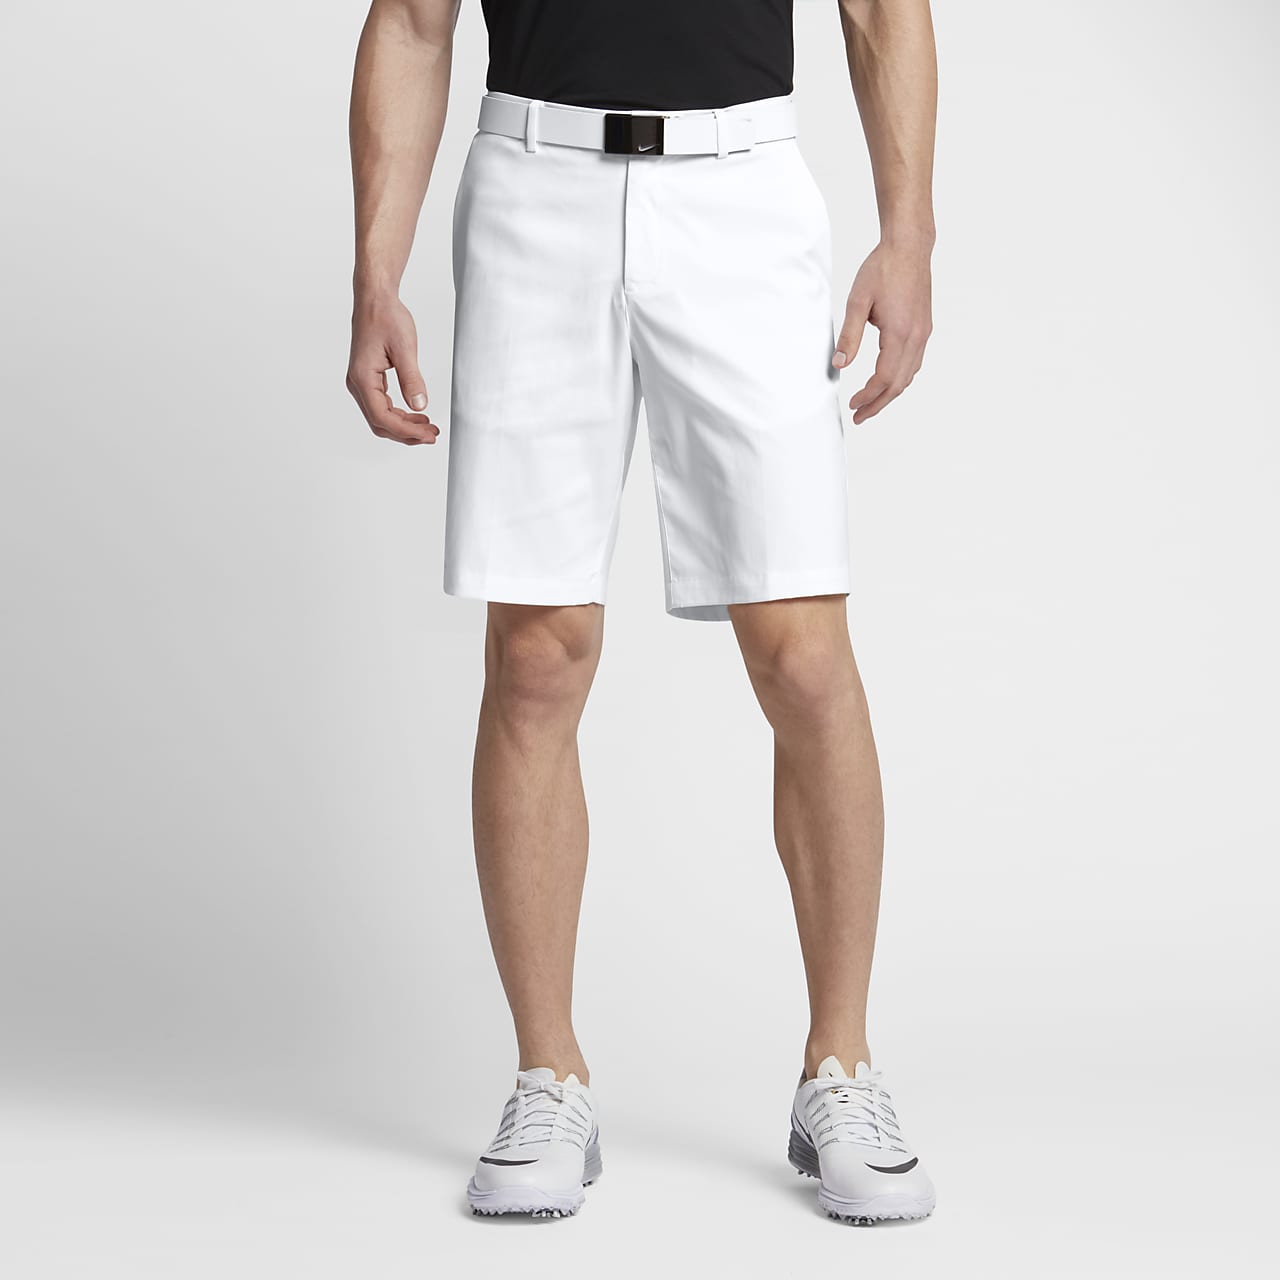 Nike Flex Golf Shorts | art-kk.com